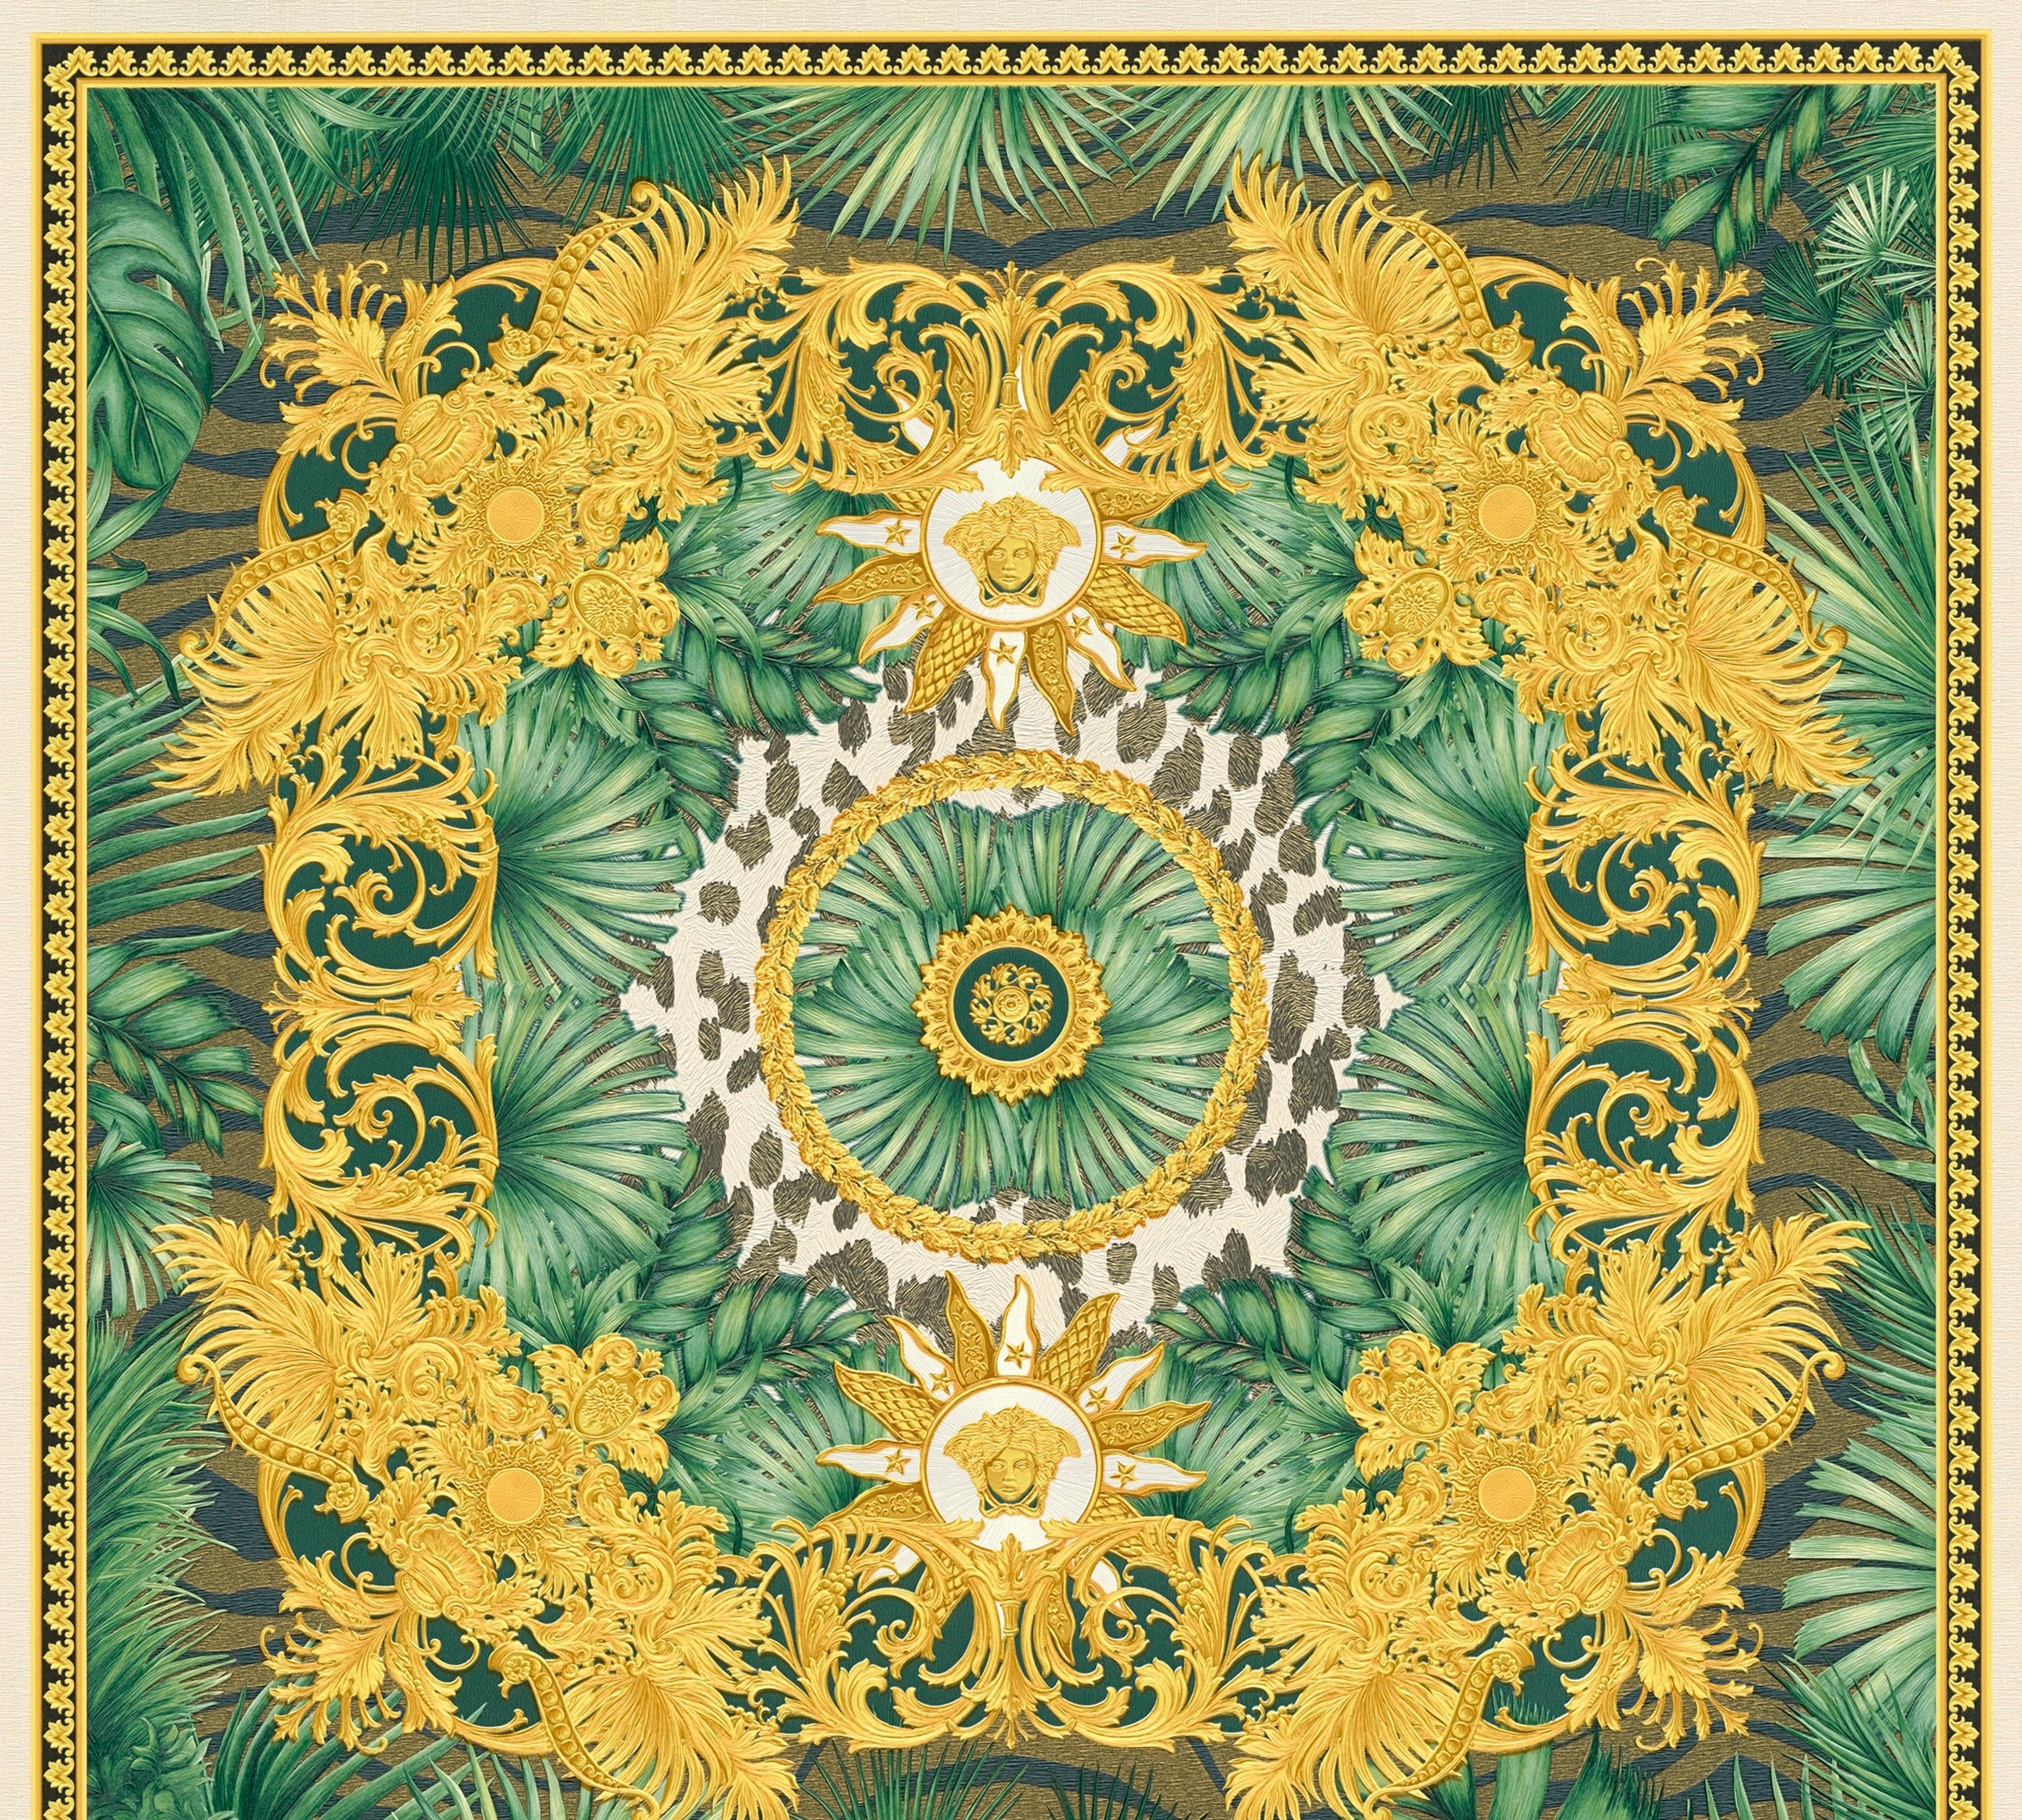 Versace Vliestapete St), grün/goldfarben/weiß strukturiert, Wallpaper leicht Versace leicht 5 glänzend, Fliesen-Tapete Dschungel auffallende Design, (1